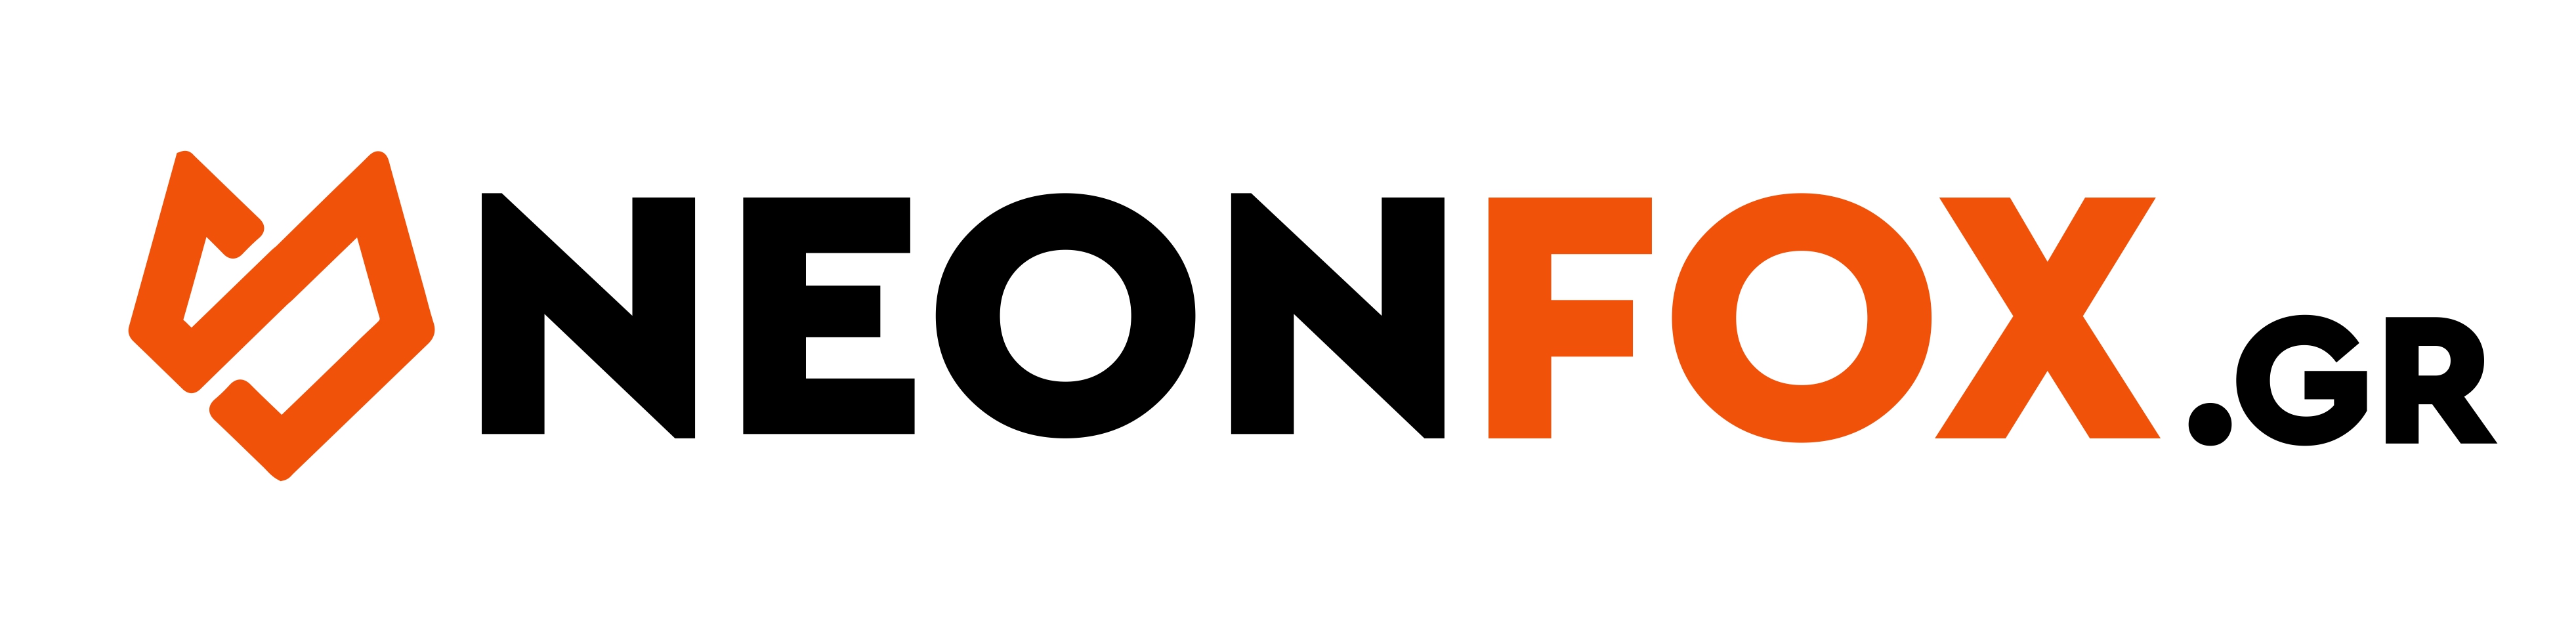 neonfox logo page 0001